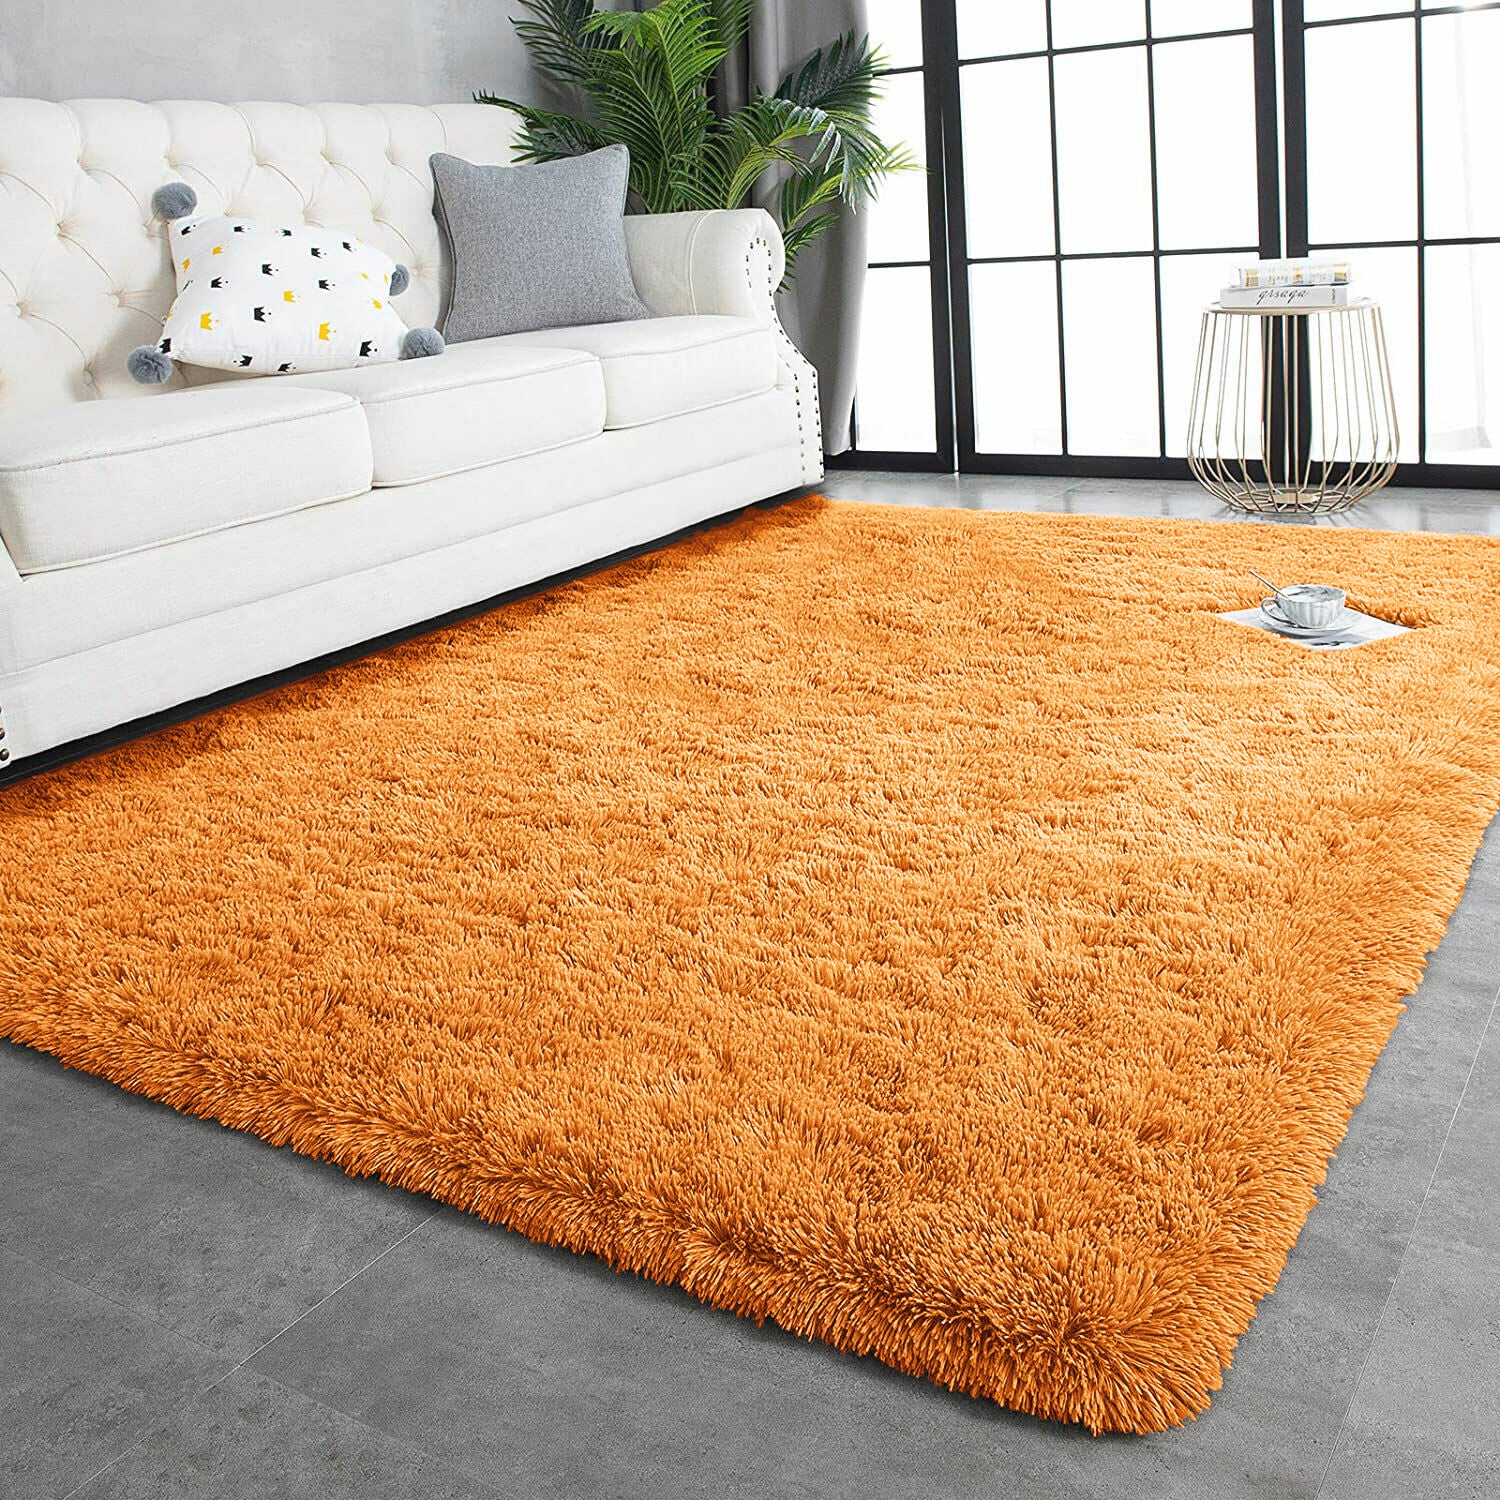 Ochre Shaggy Rug Large Fluffy Carpet